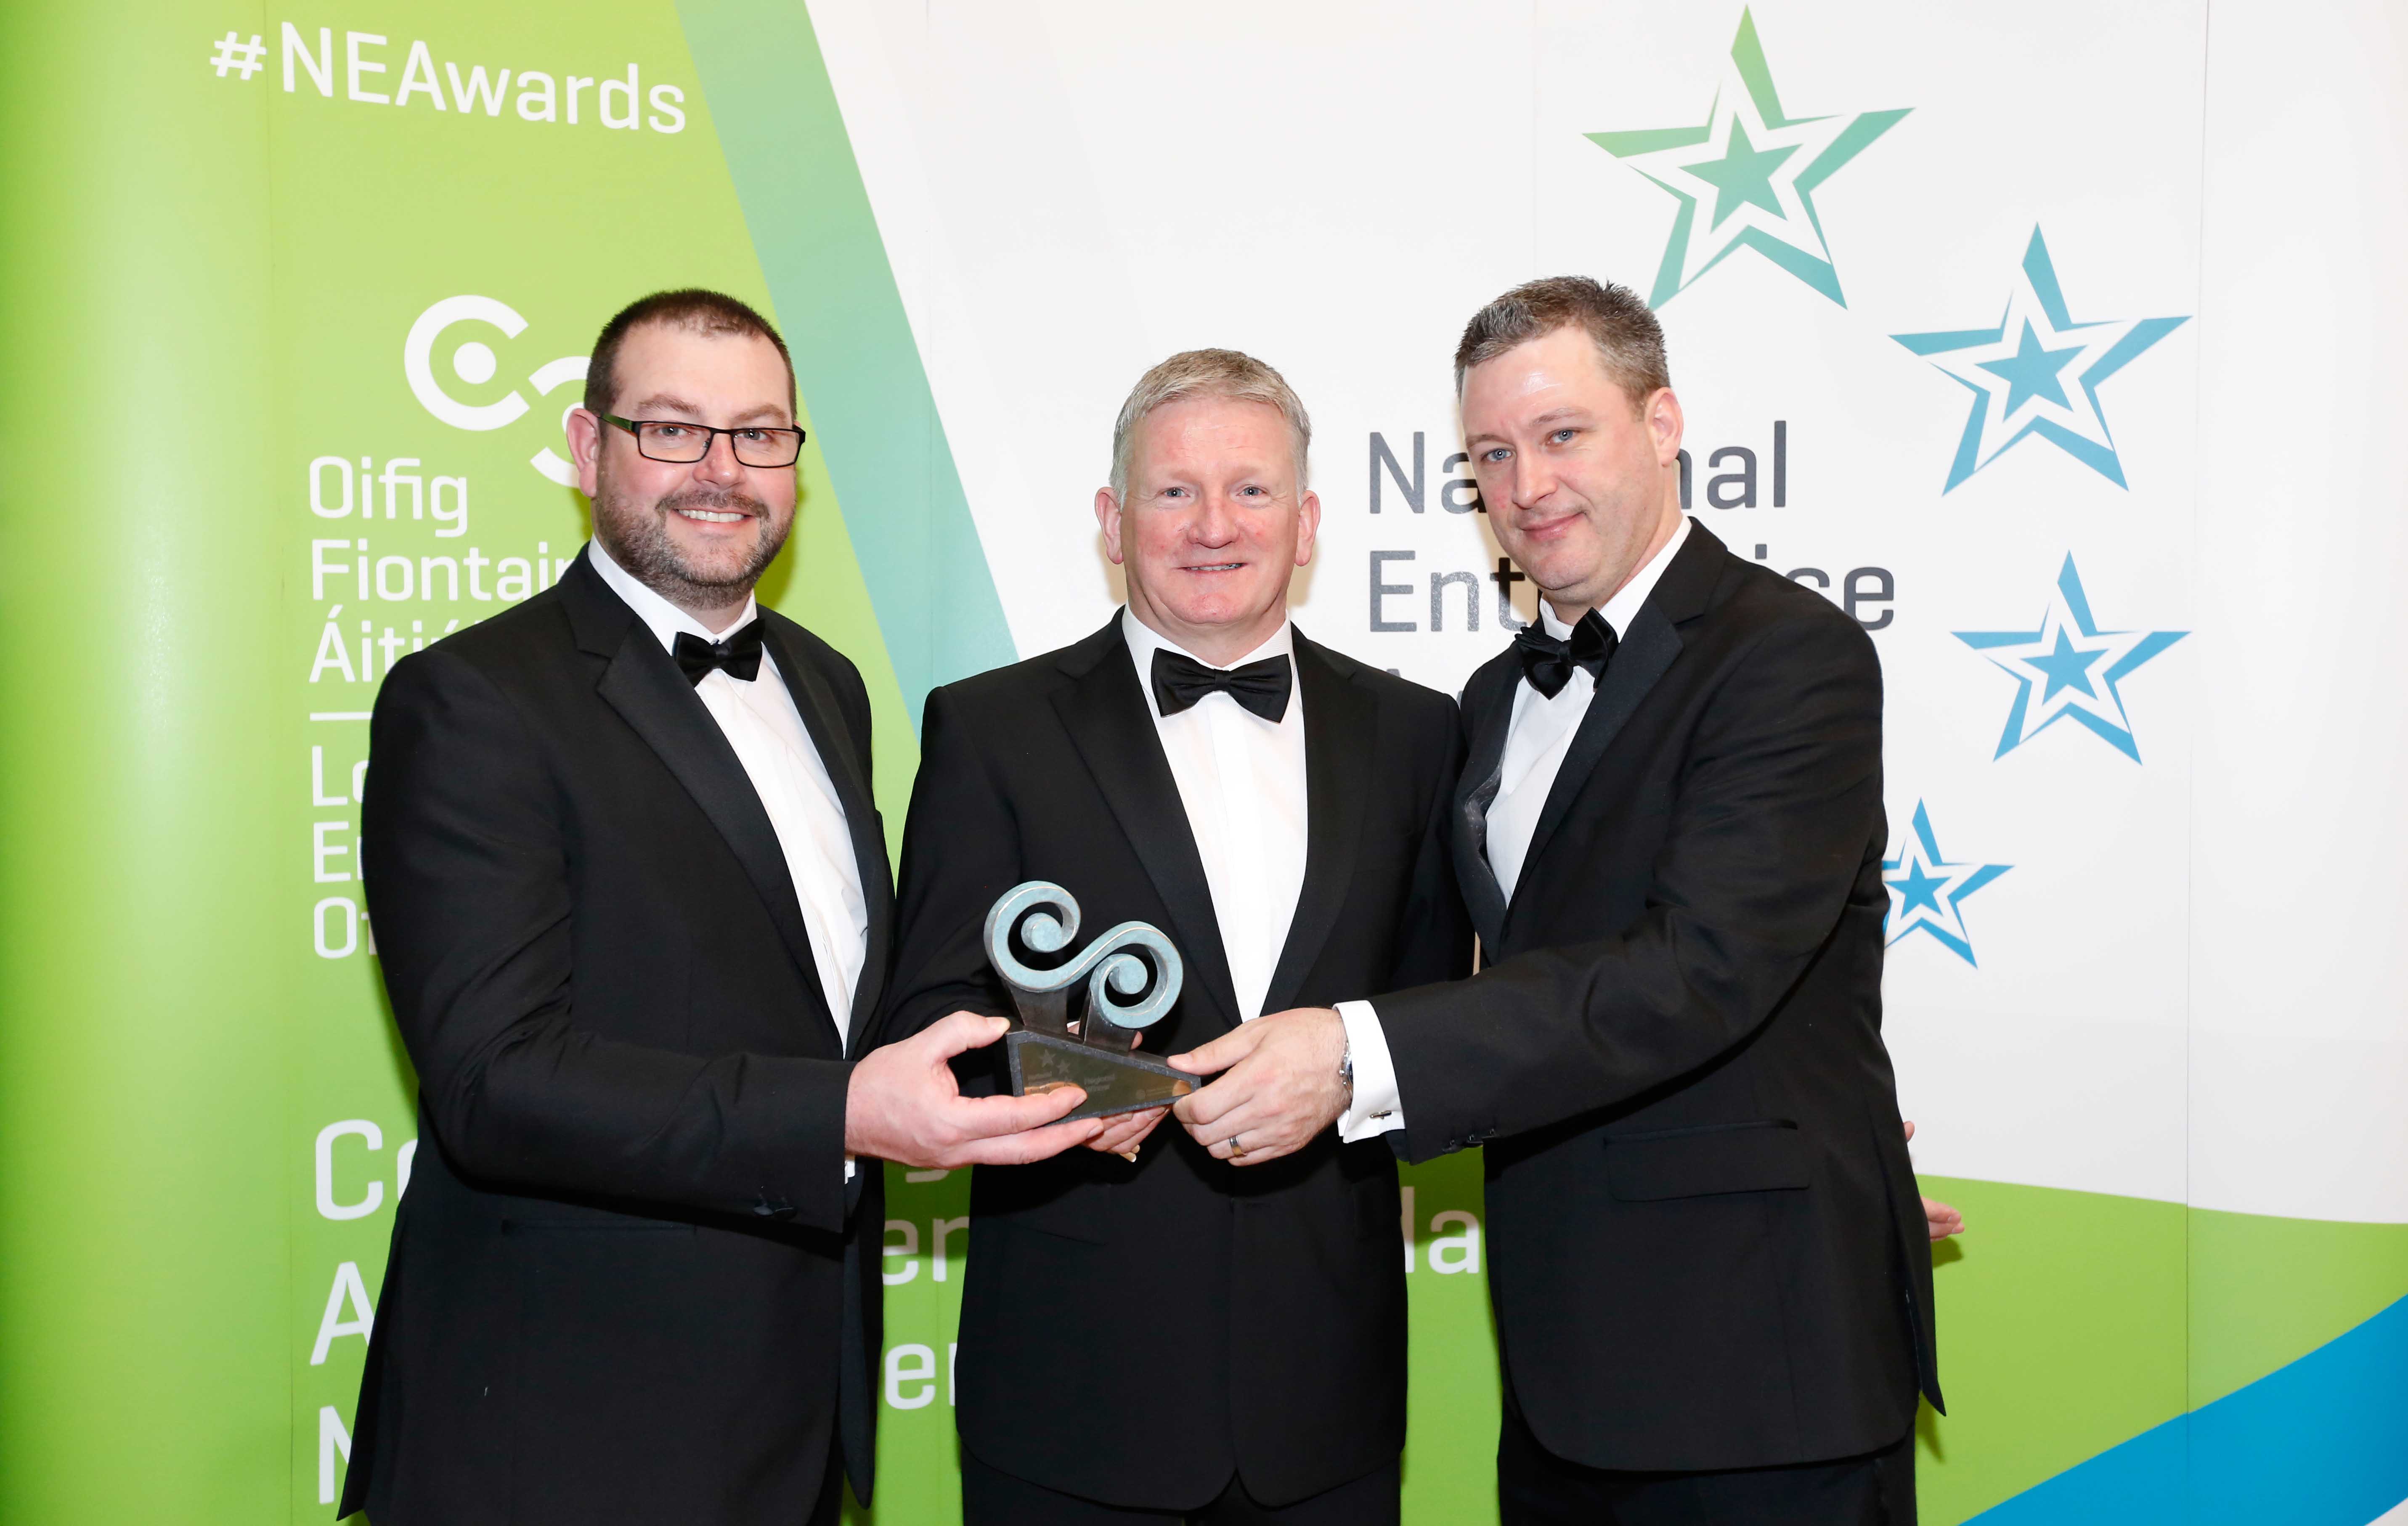 South Dublin Company Wins National Enterprise Award